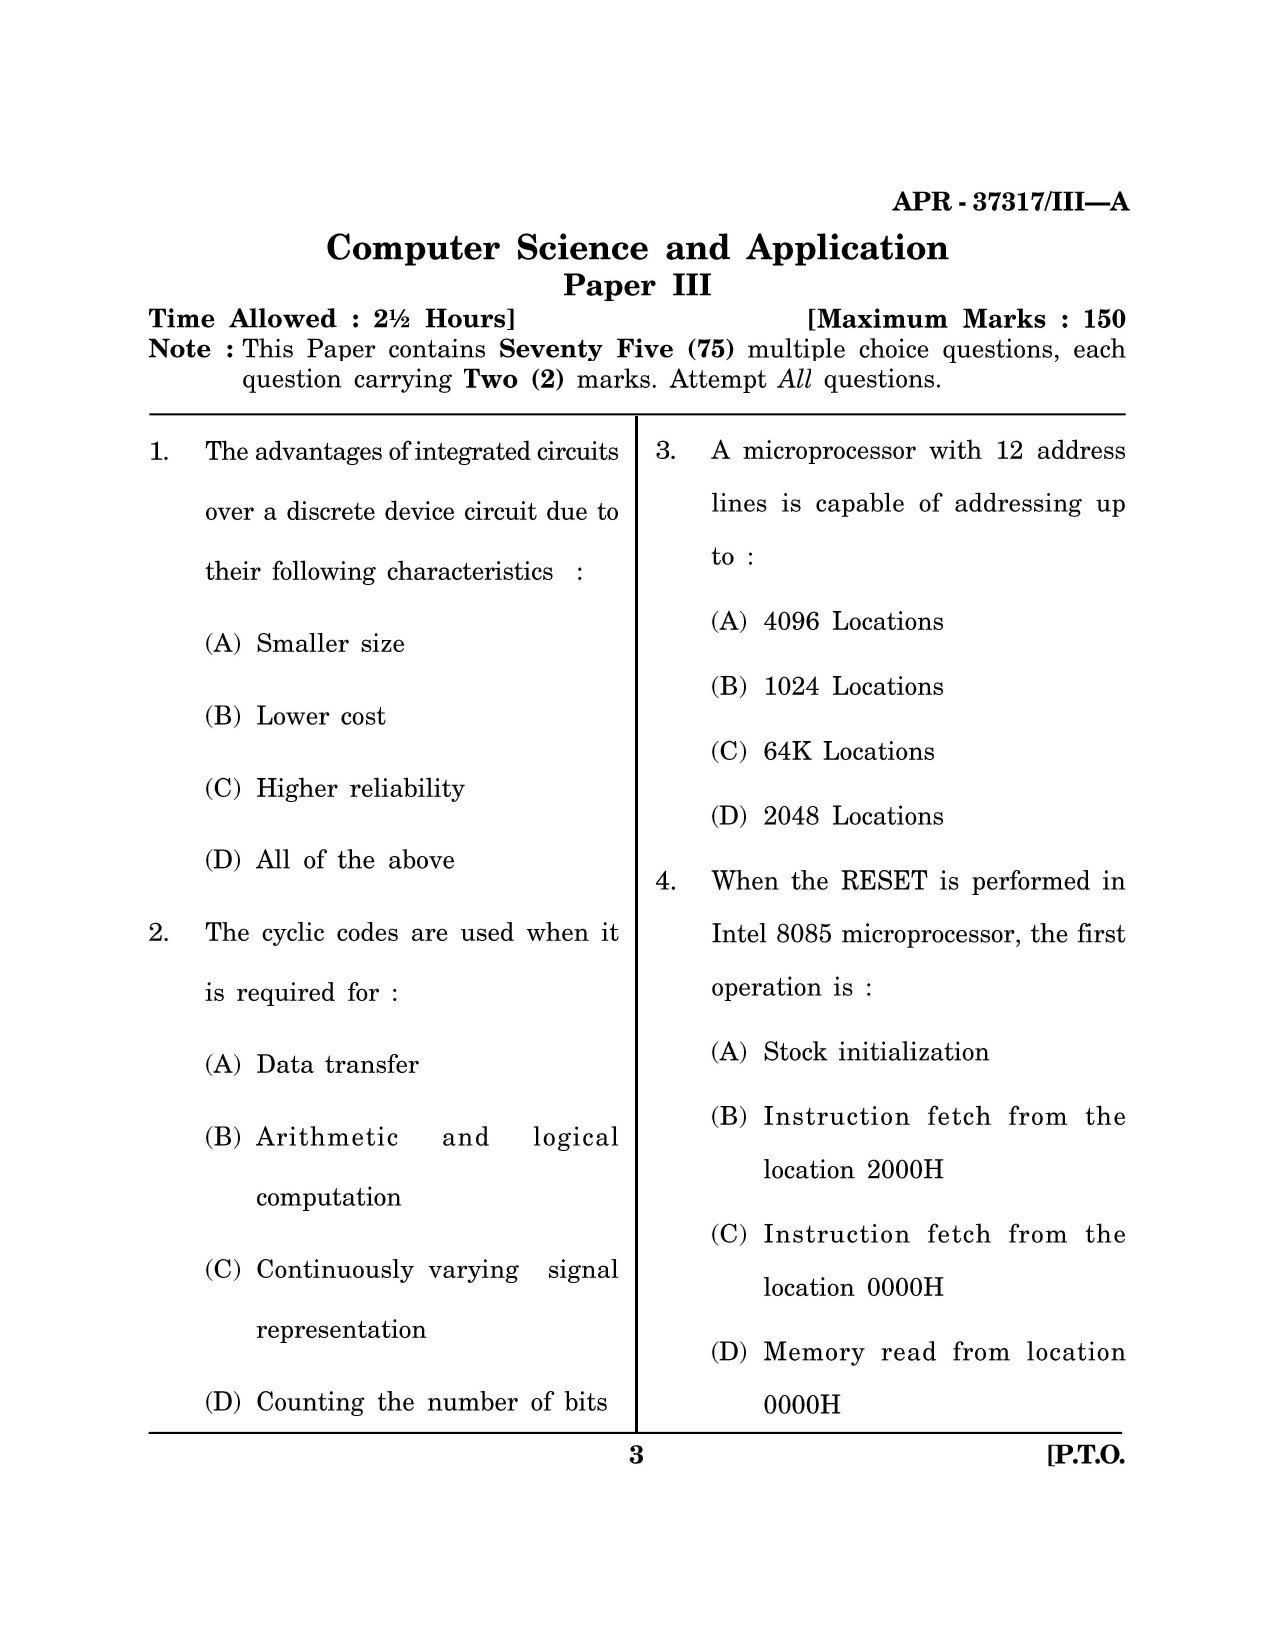 Maharashtra SET Computer Science and Application Question Paper III April 2017 2